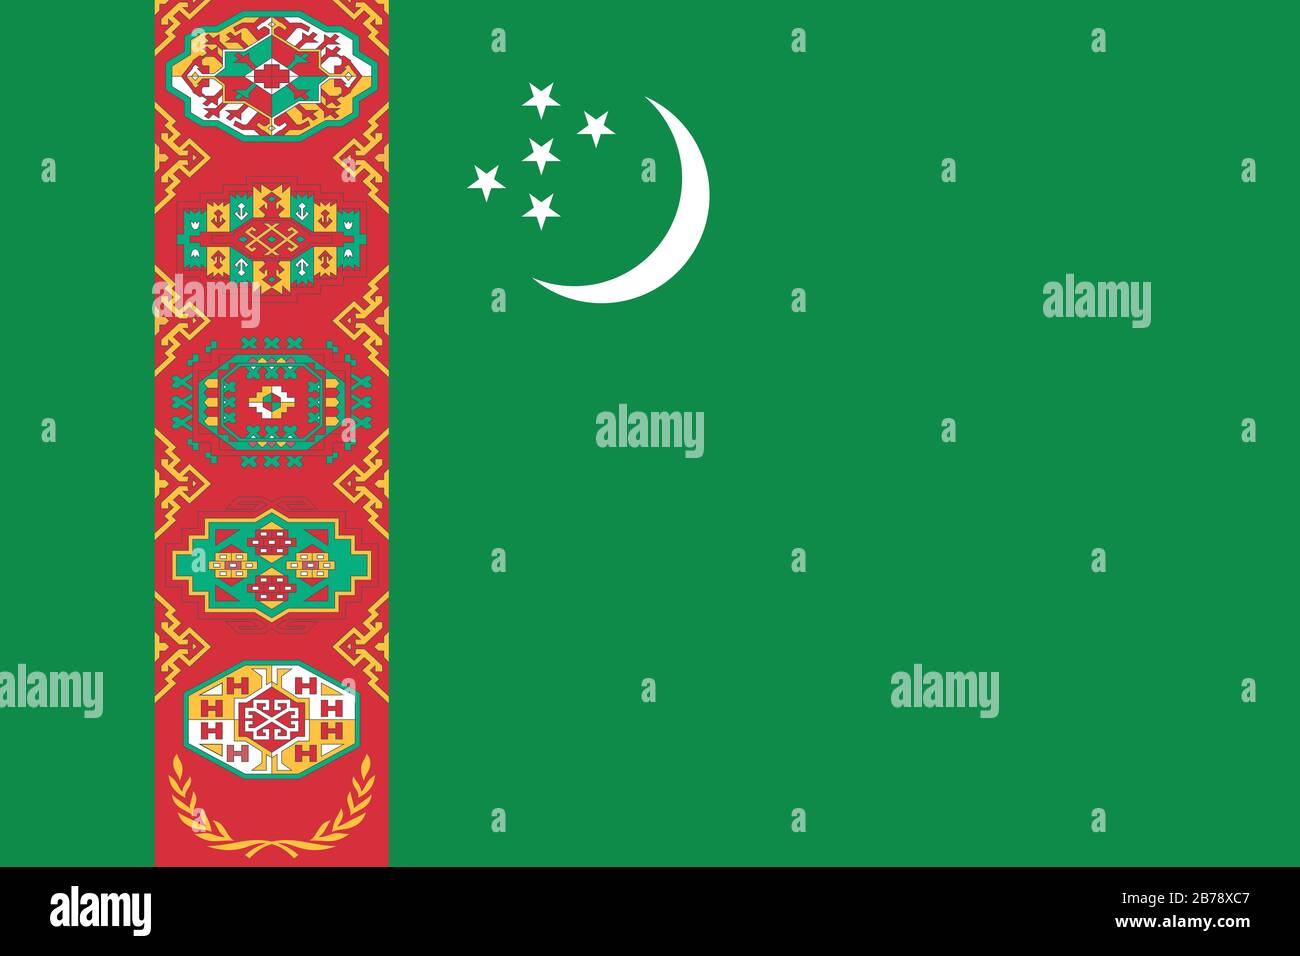 Flagge Turkmenistans - Standardverhältnis der Turkmenen-Flagge - True RGB-Farbmodus Stockfoto